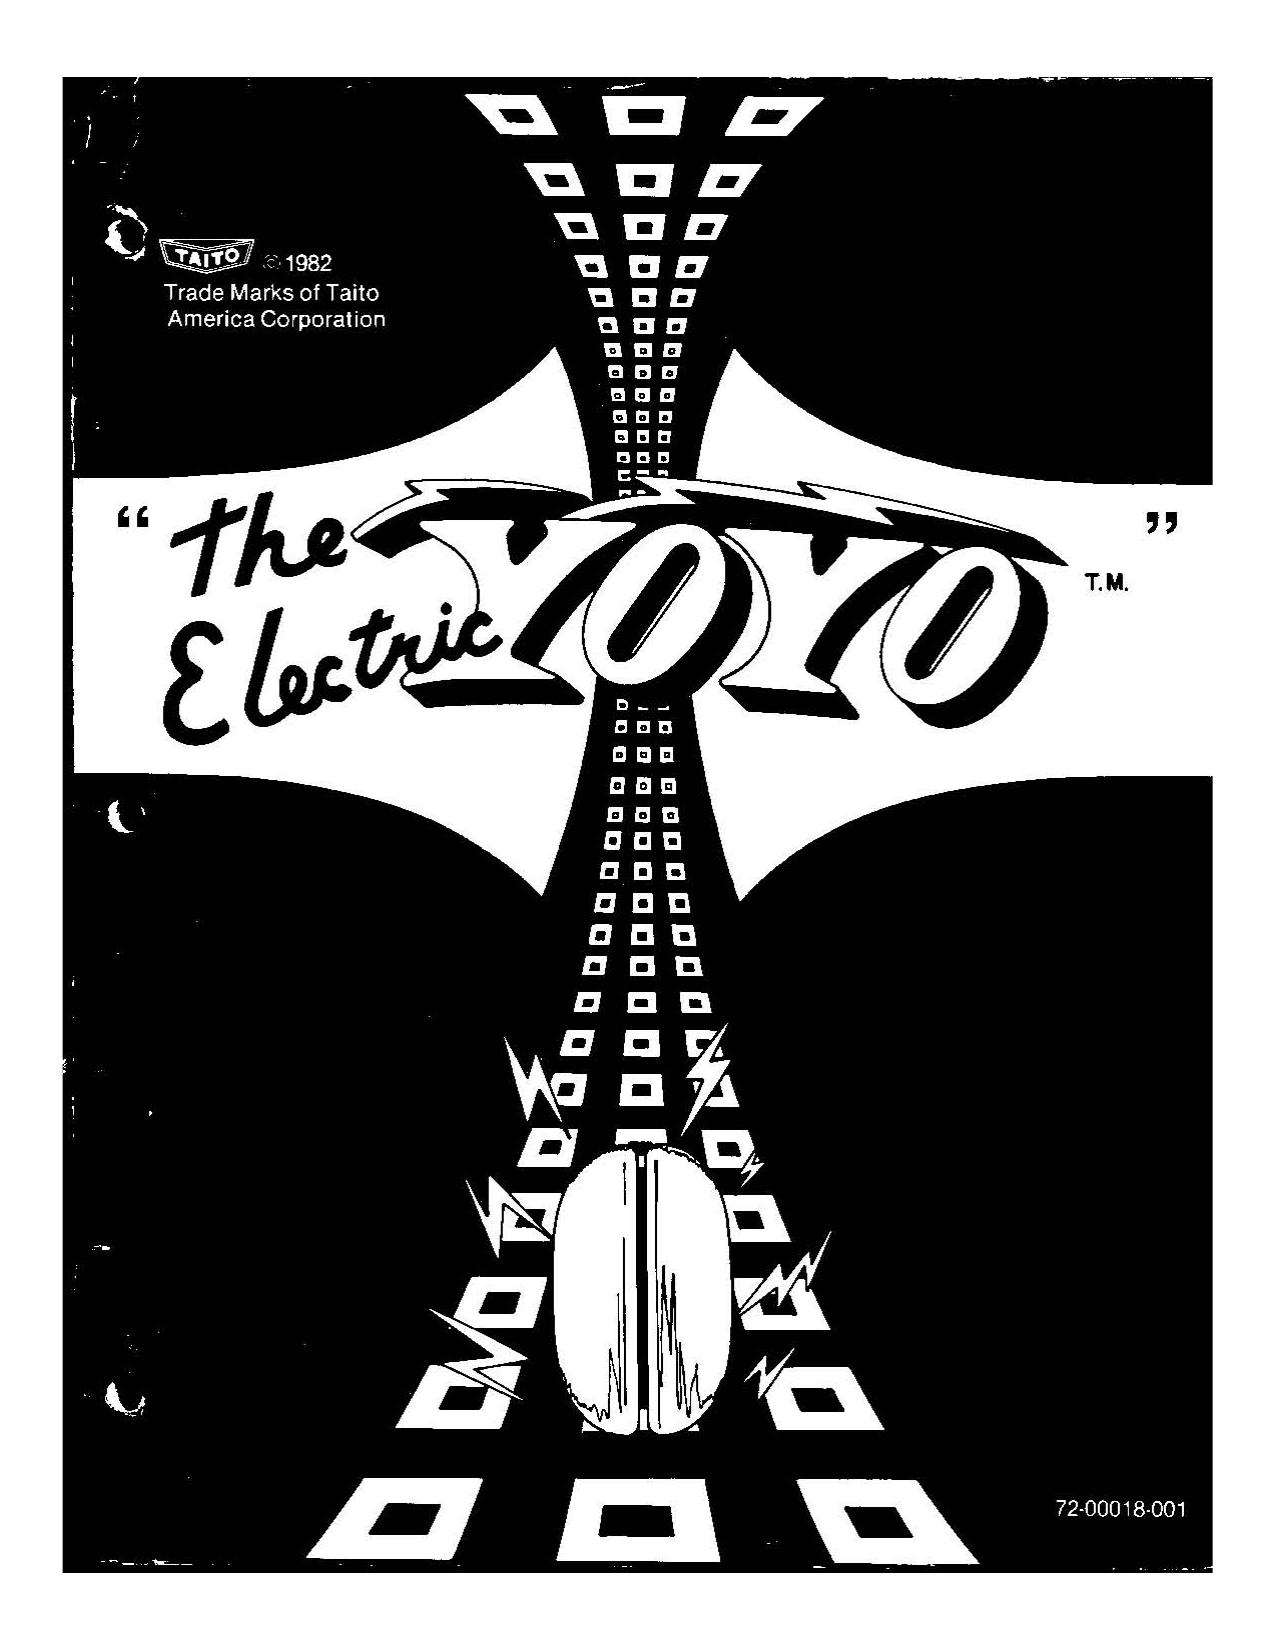 The Electric Yoyo (Op-Maint-Serv-Part) (U)